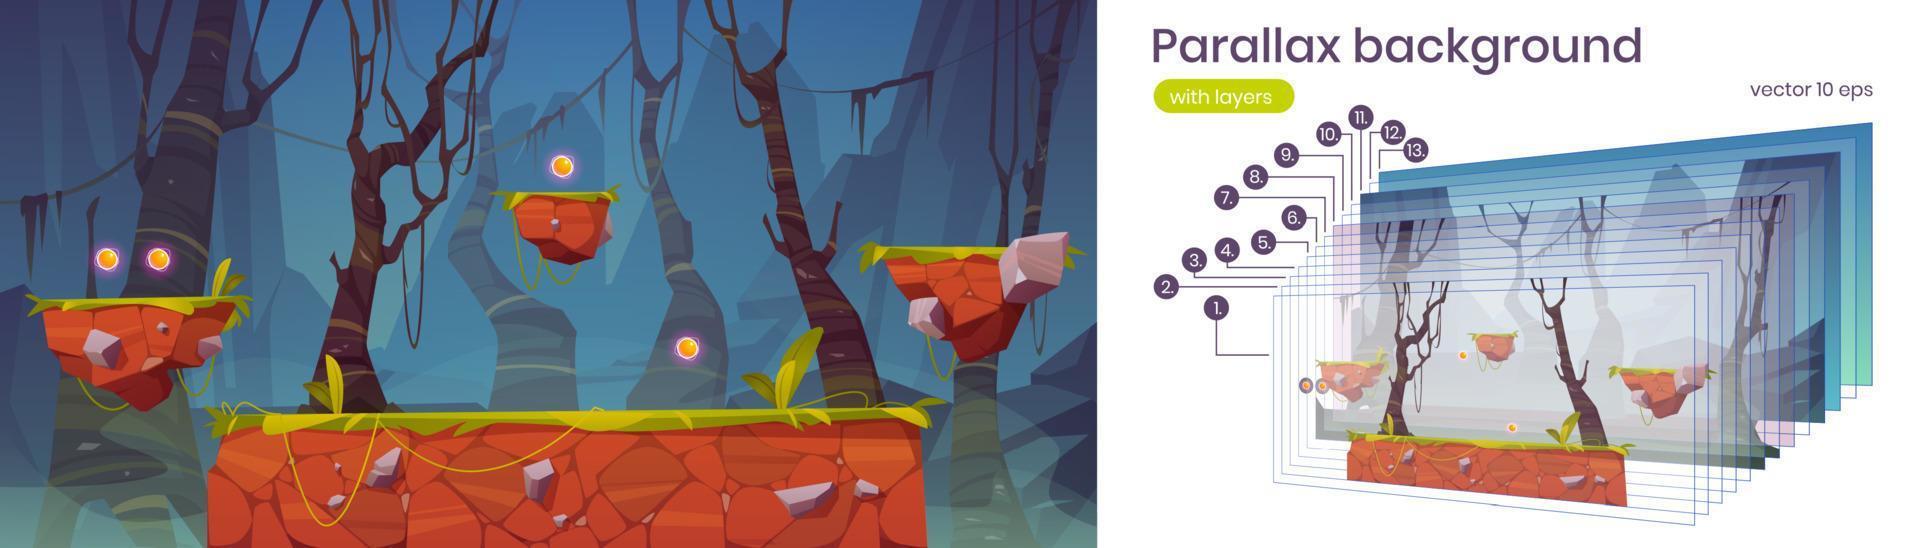 parallax achtergrond spel platform tekenfilm 2d tafereel vector